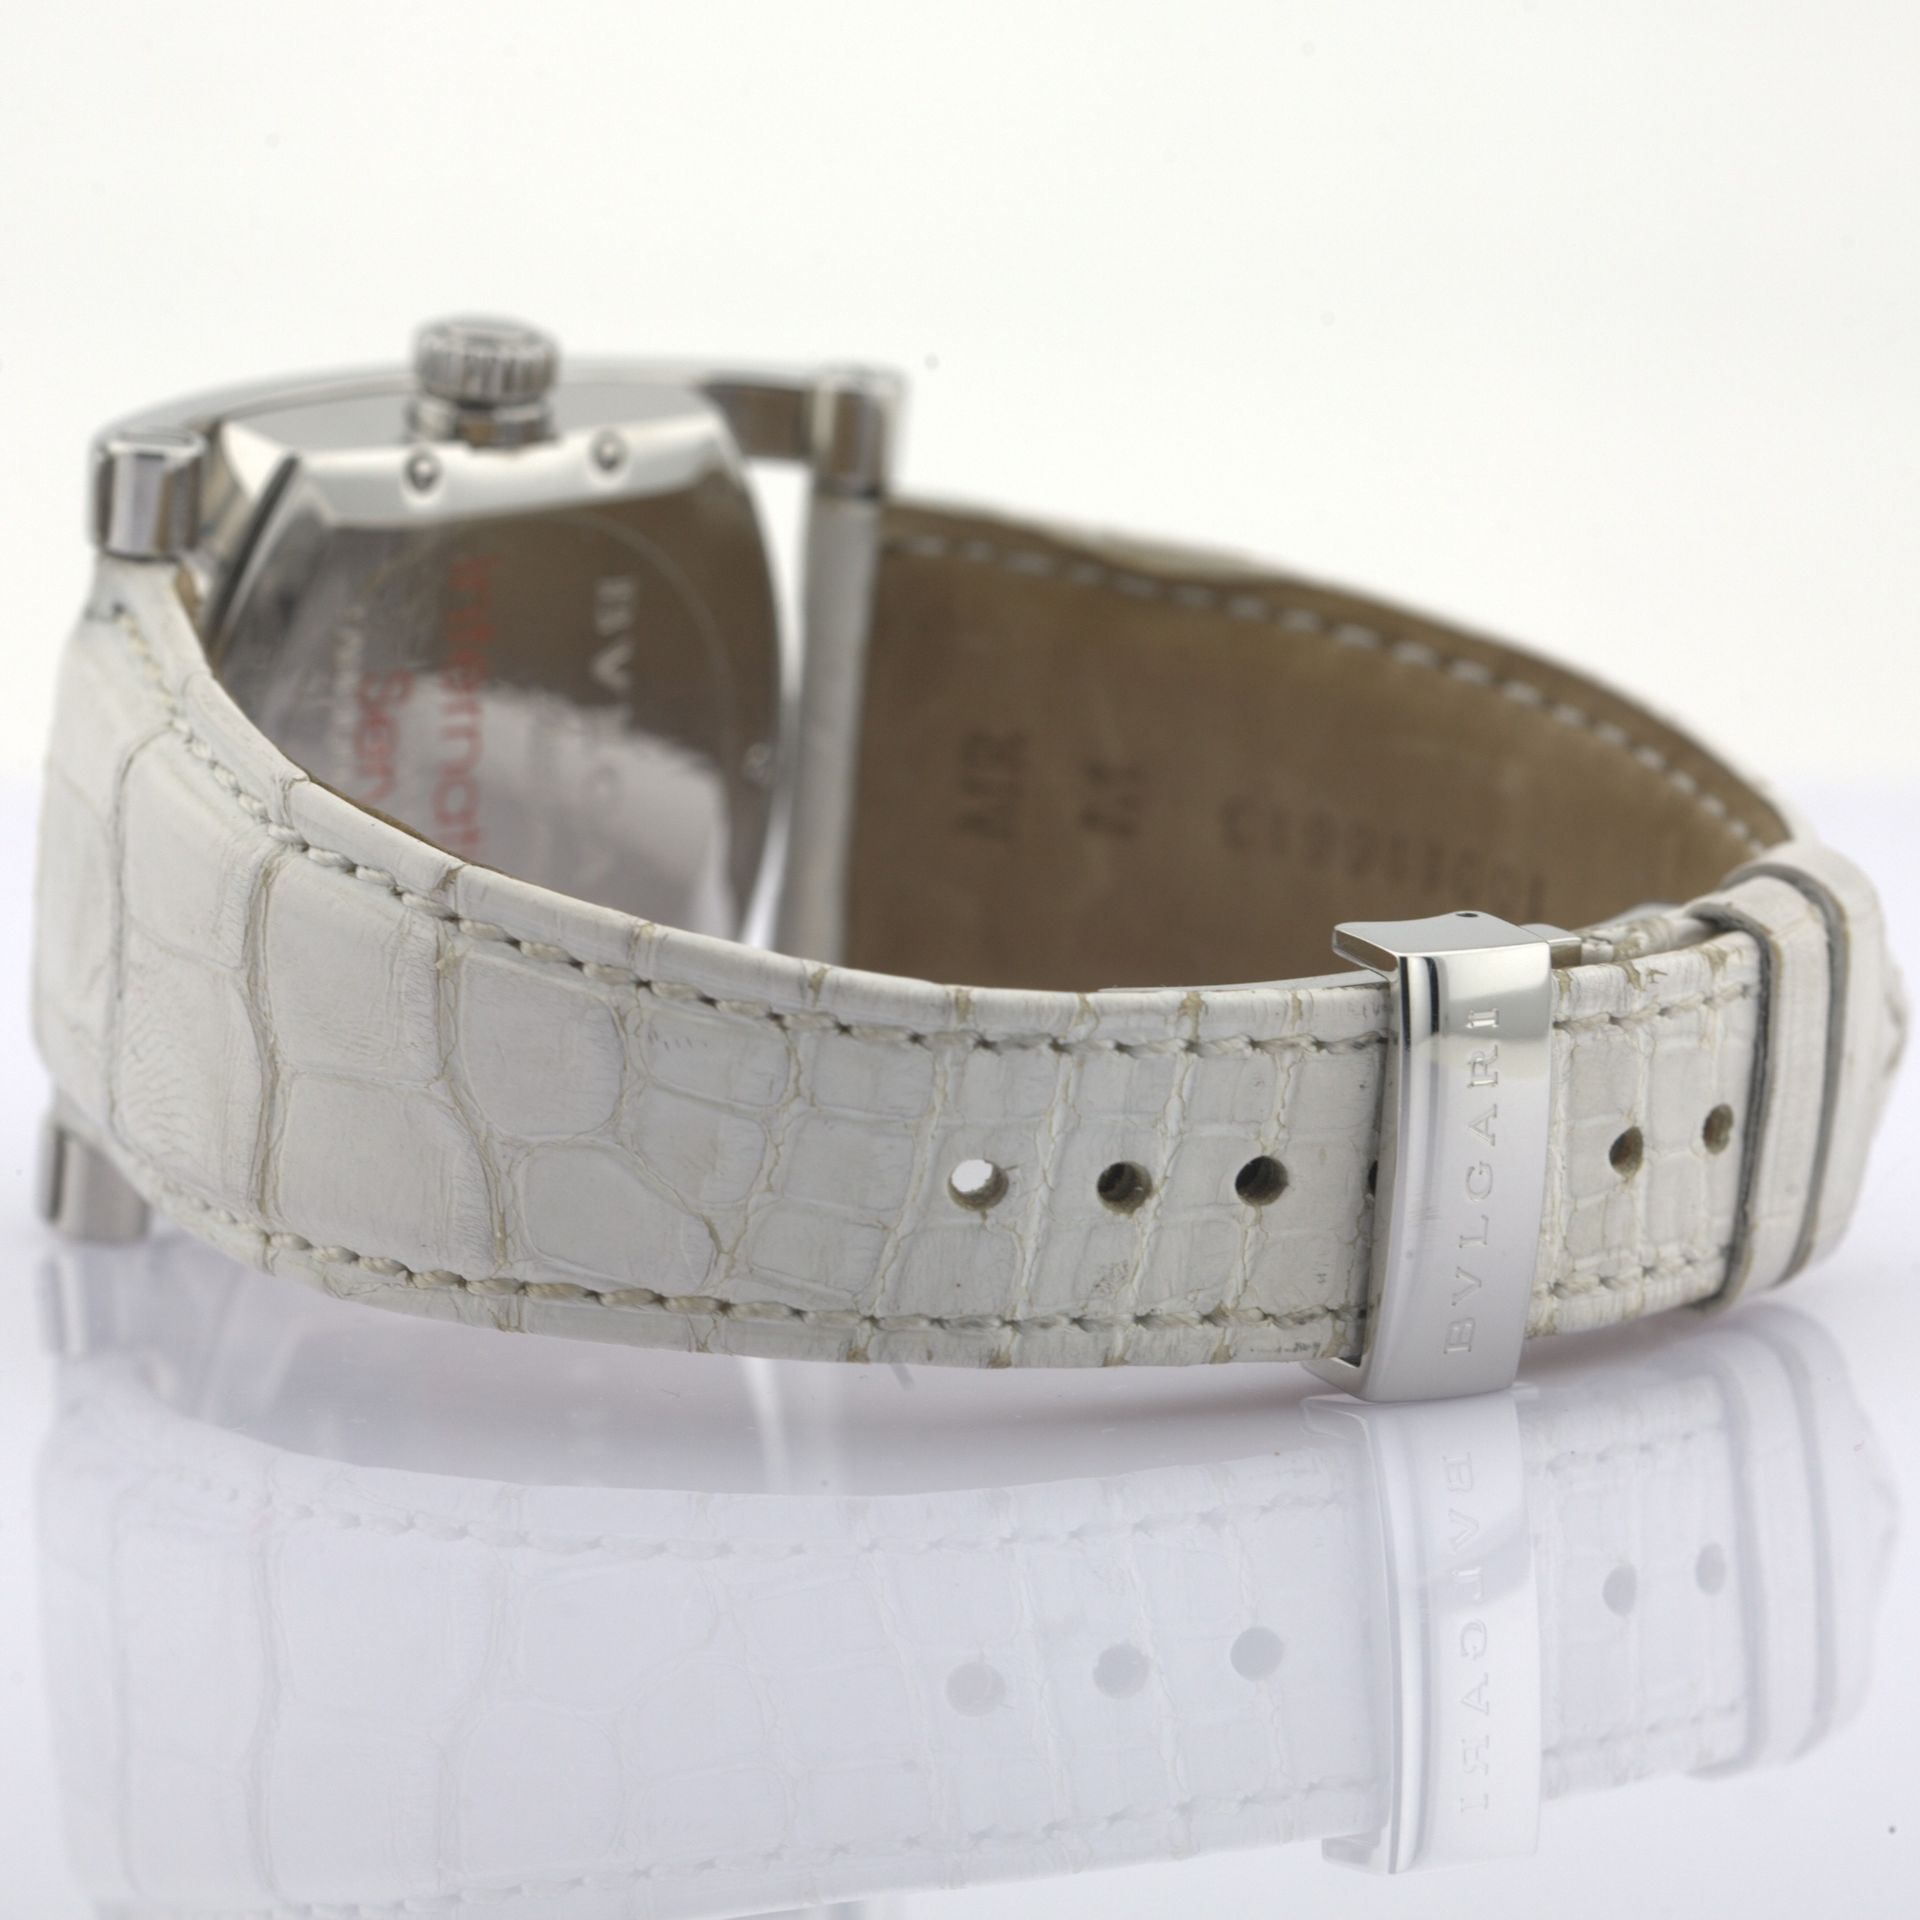 Bvlgari / AA44S Diamond Mother of pearl dial - Gentlmen's Steel Wrist Watch - Image 10 of 11